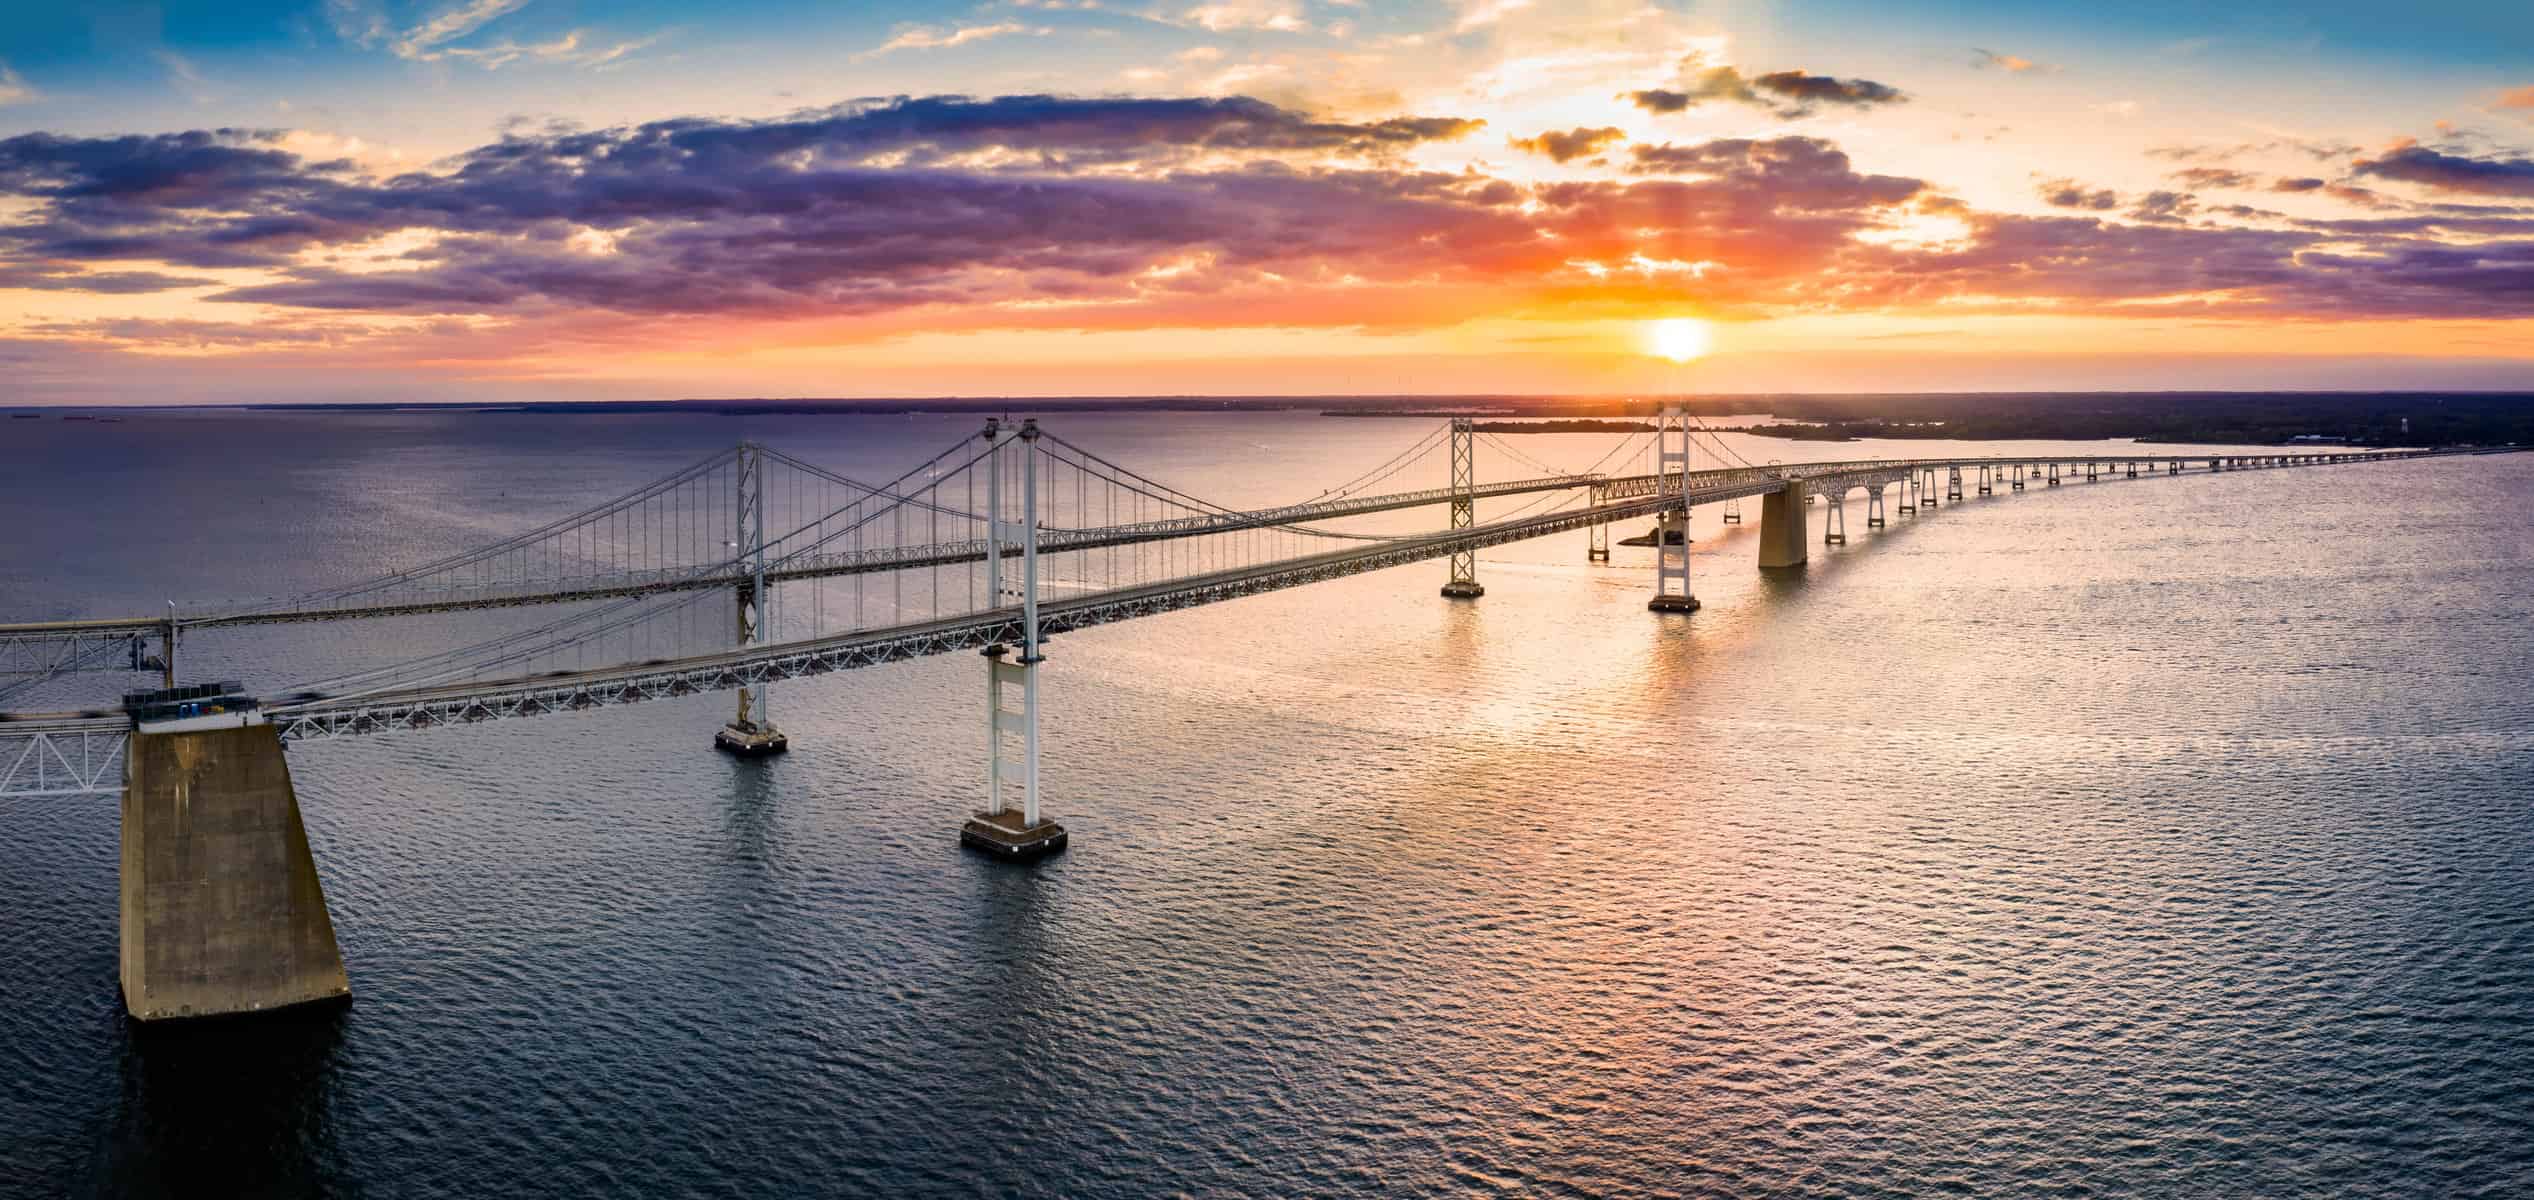 Aerial View Of Chesapeake Bay Bridge At Sunset Civil Structural Engineer Magazine